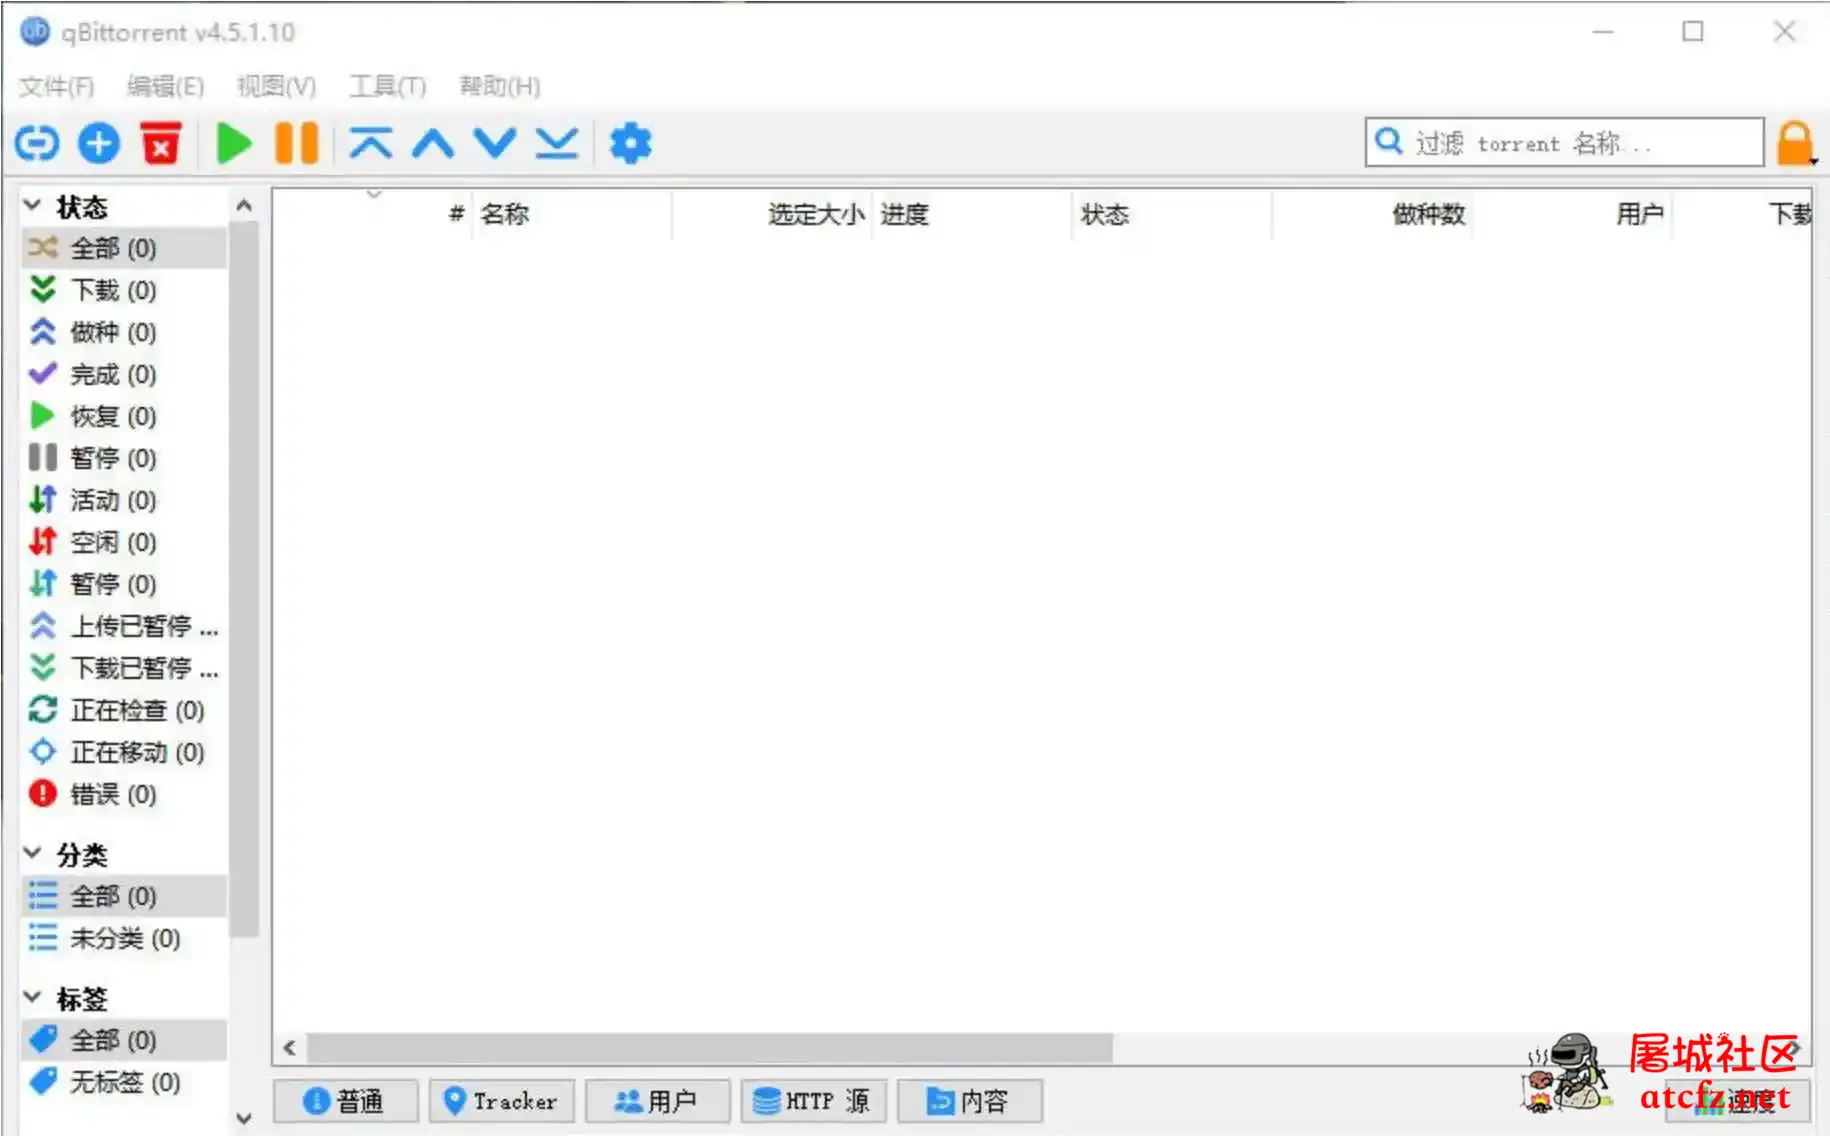 qBittorrent v4.5.3.10增强便携版BT种子下载工具 屠城辅助网www.tcfz1.com5209